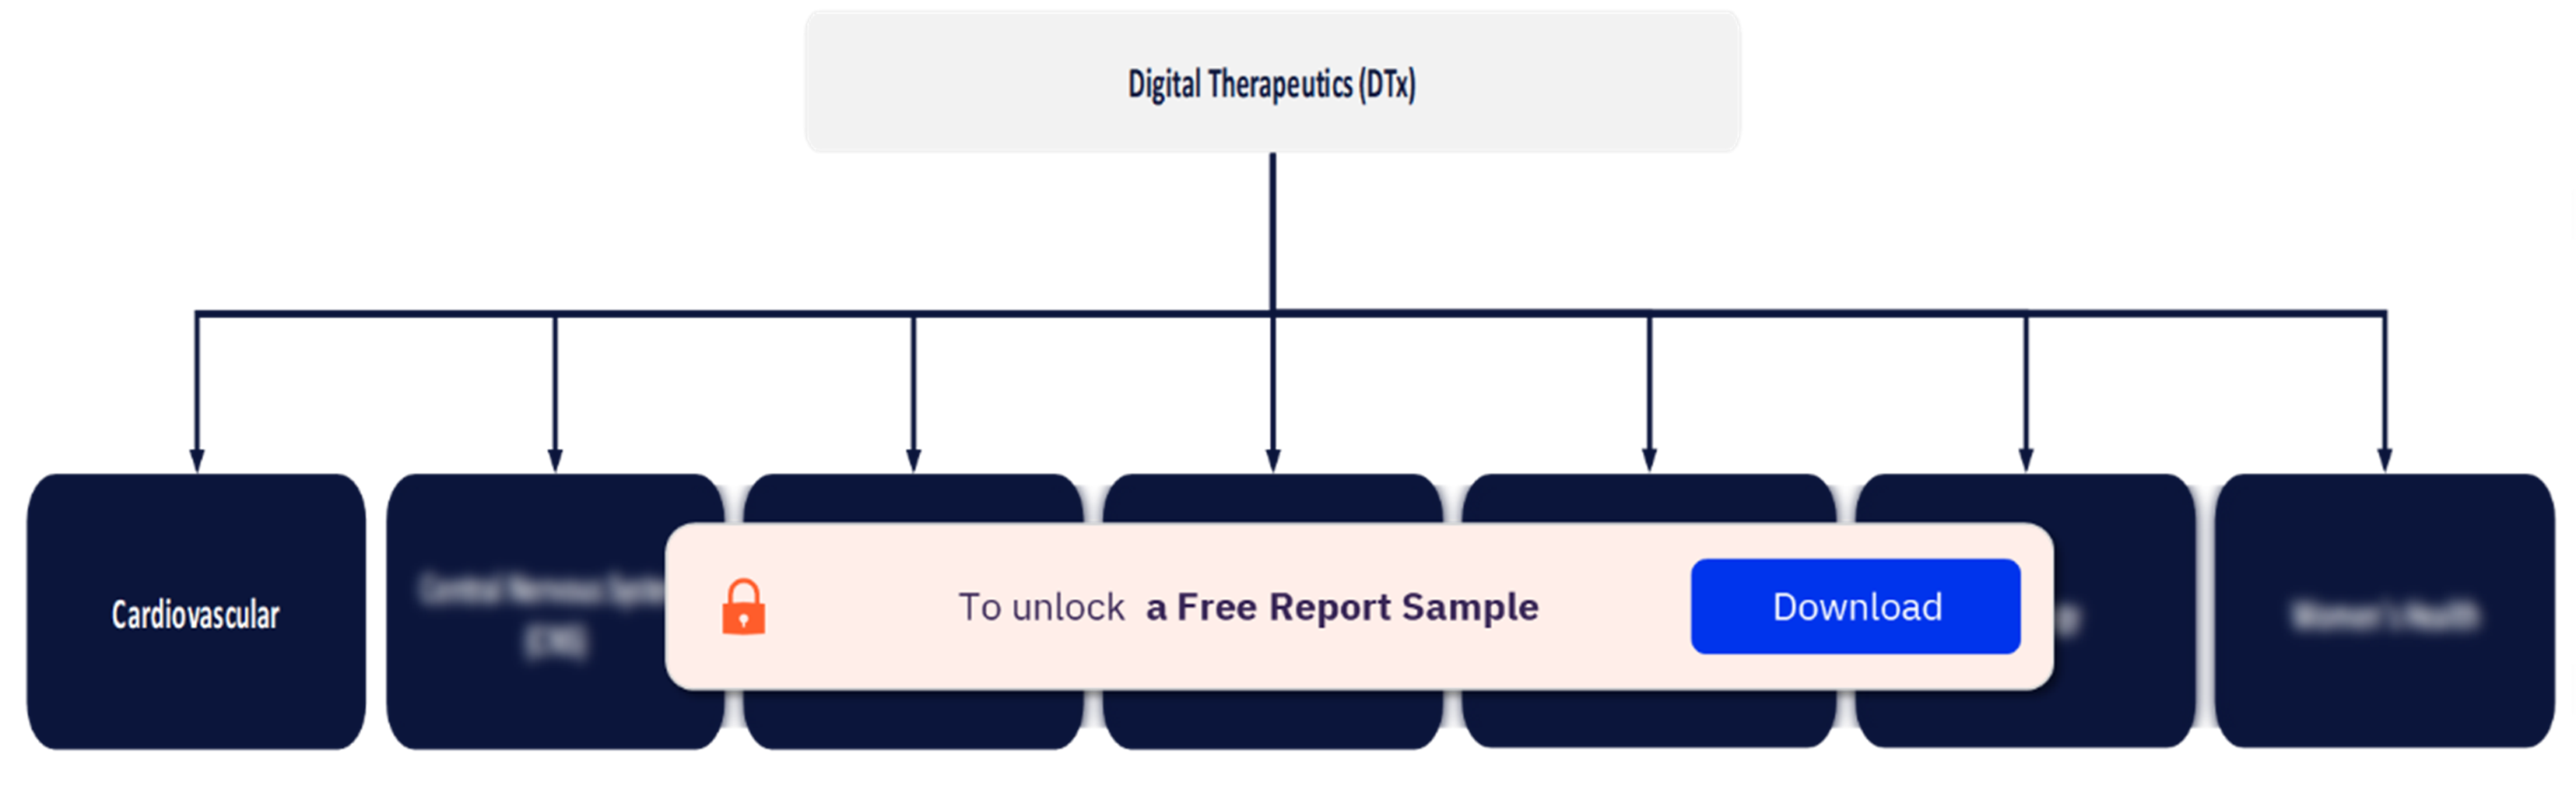 Digital Therapeutics Value Chain Analysis